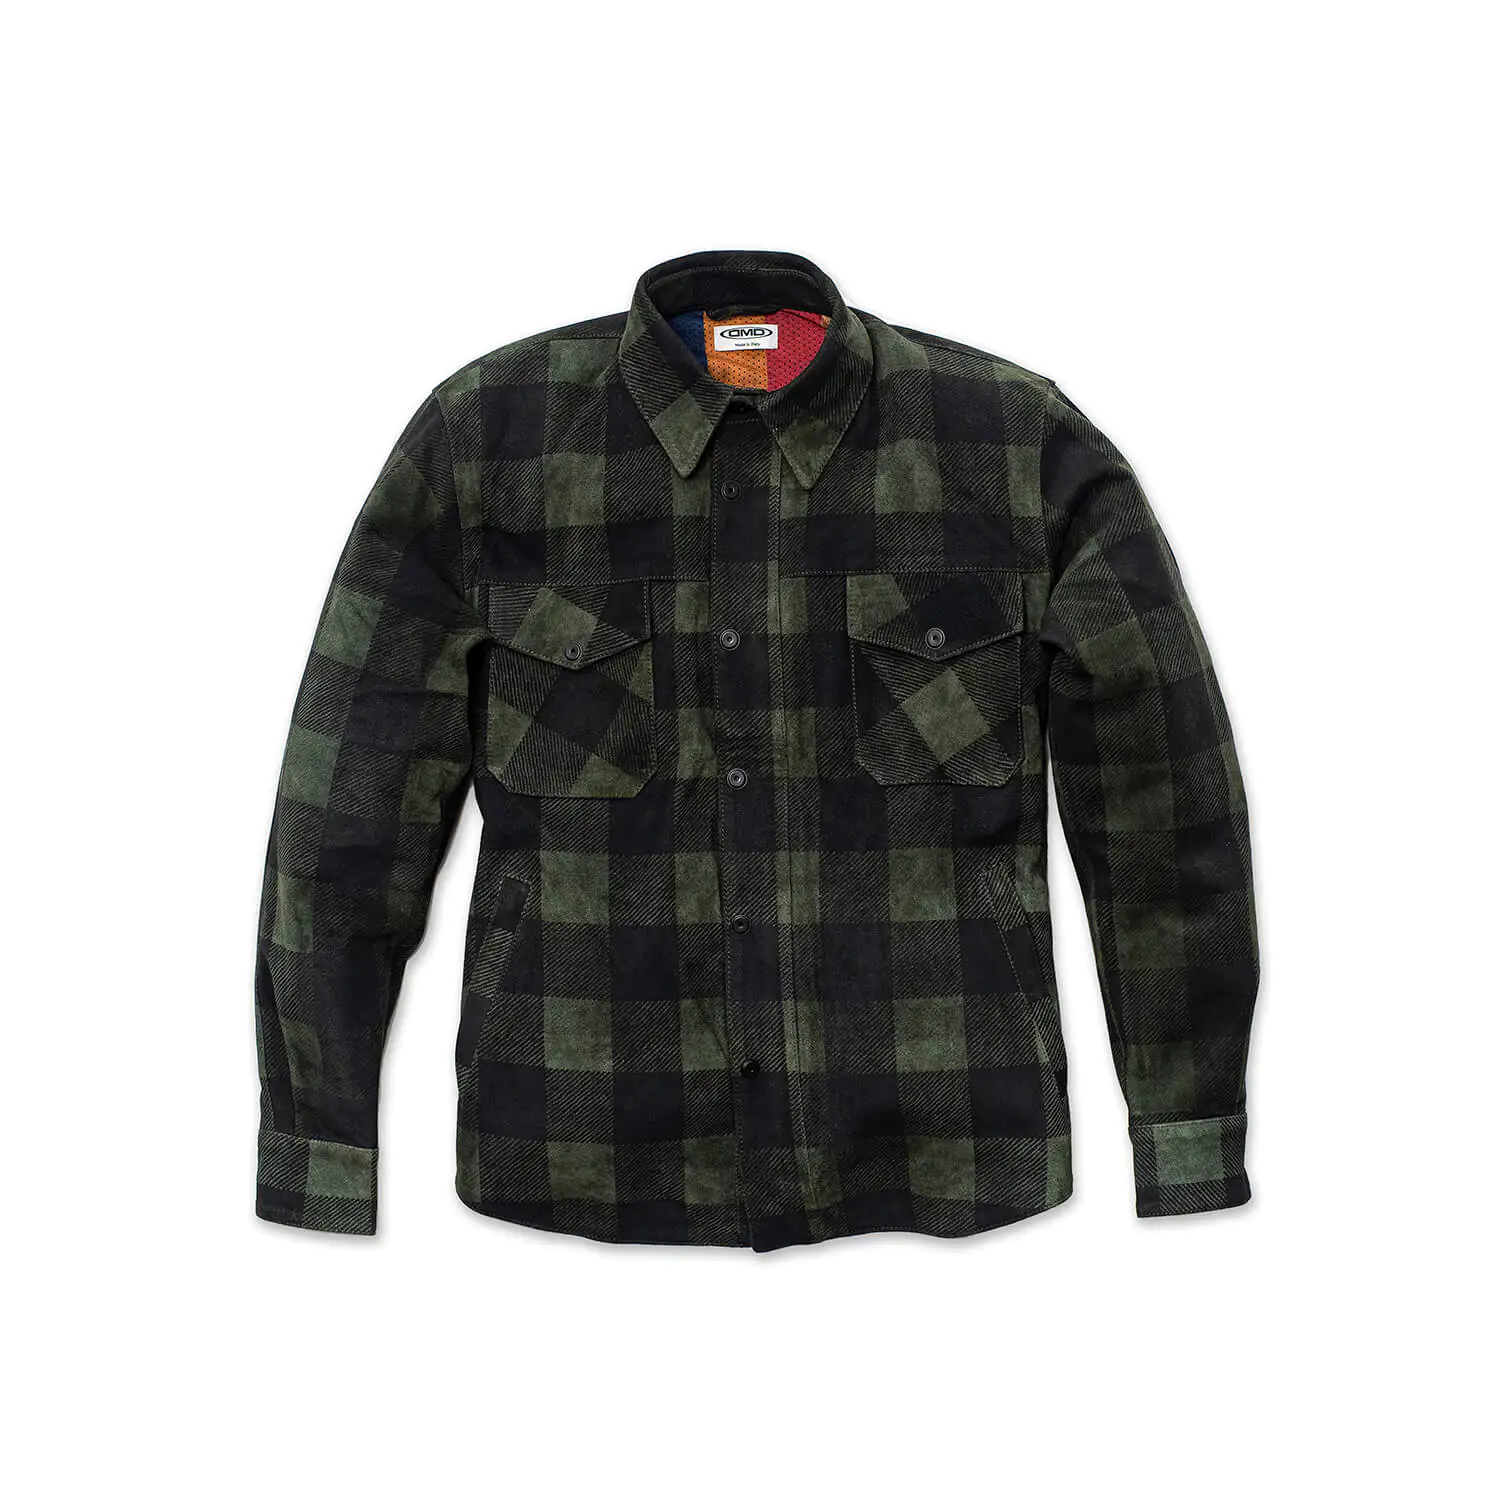 dmd.eu - SHIRT CHECK GREEN DMD – Shirt check green leather – front